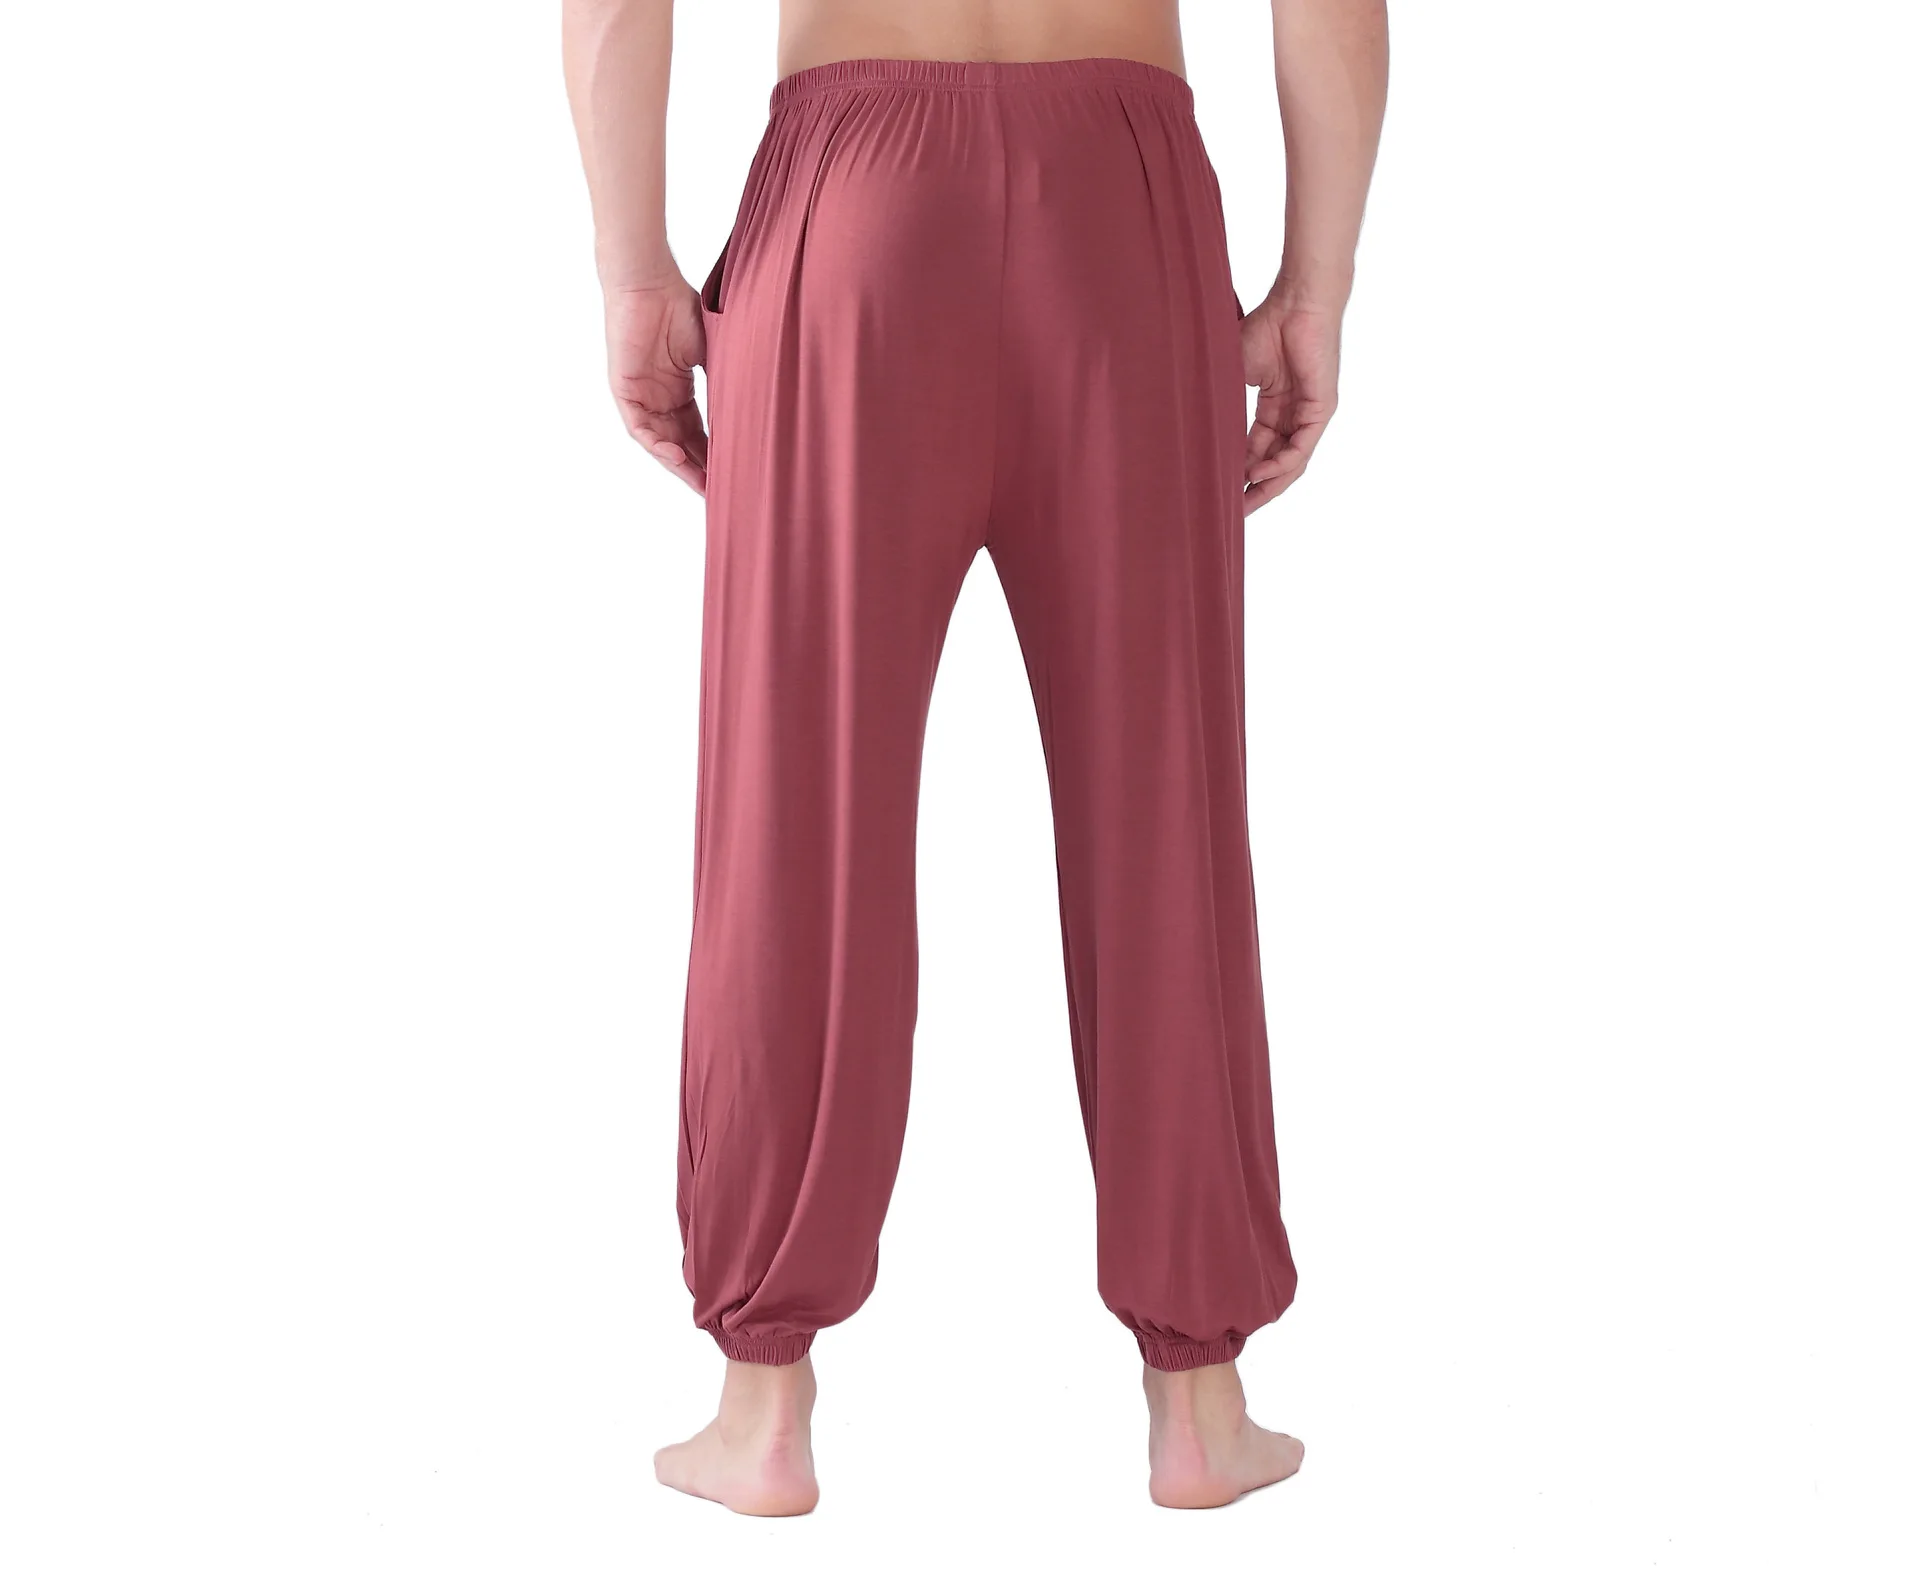 cotton pajama pants Fdfklak 2020 Spring Autumn New Sleep Pants Plus Size 3XL-6XL Men's Pajama Pants Lounge Wear Light/Deep Gray Pijama Casal best silk pajamas